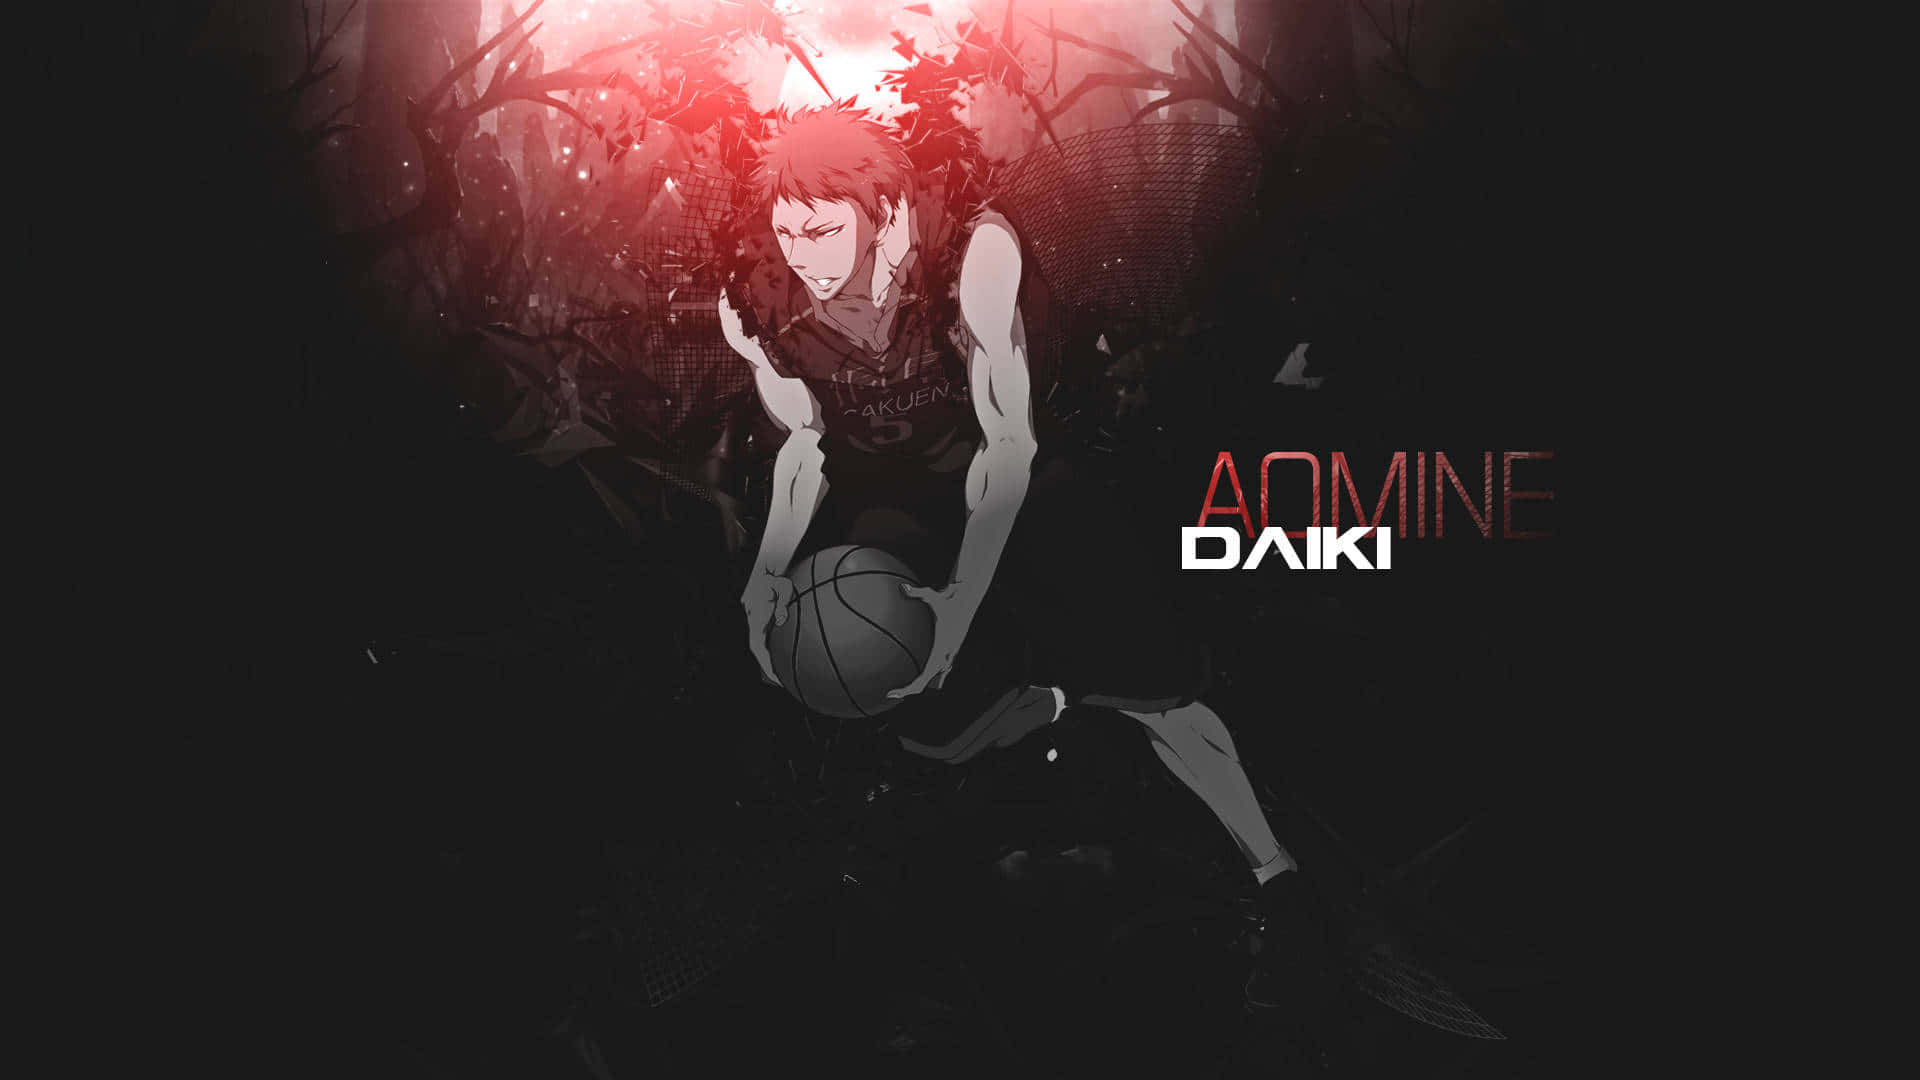 Animeschwarzer Basketball Daiki Wallpaper